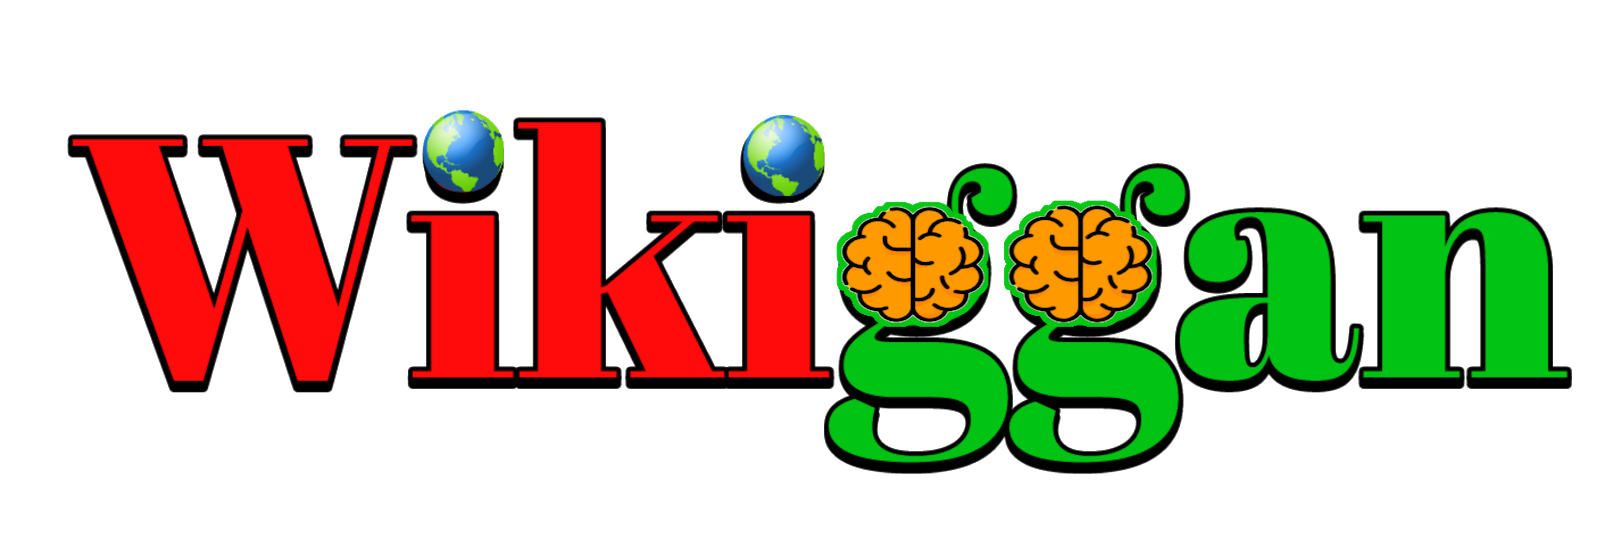 Wikiggan | Bangladeshi Technology Website Platform 